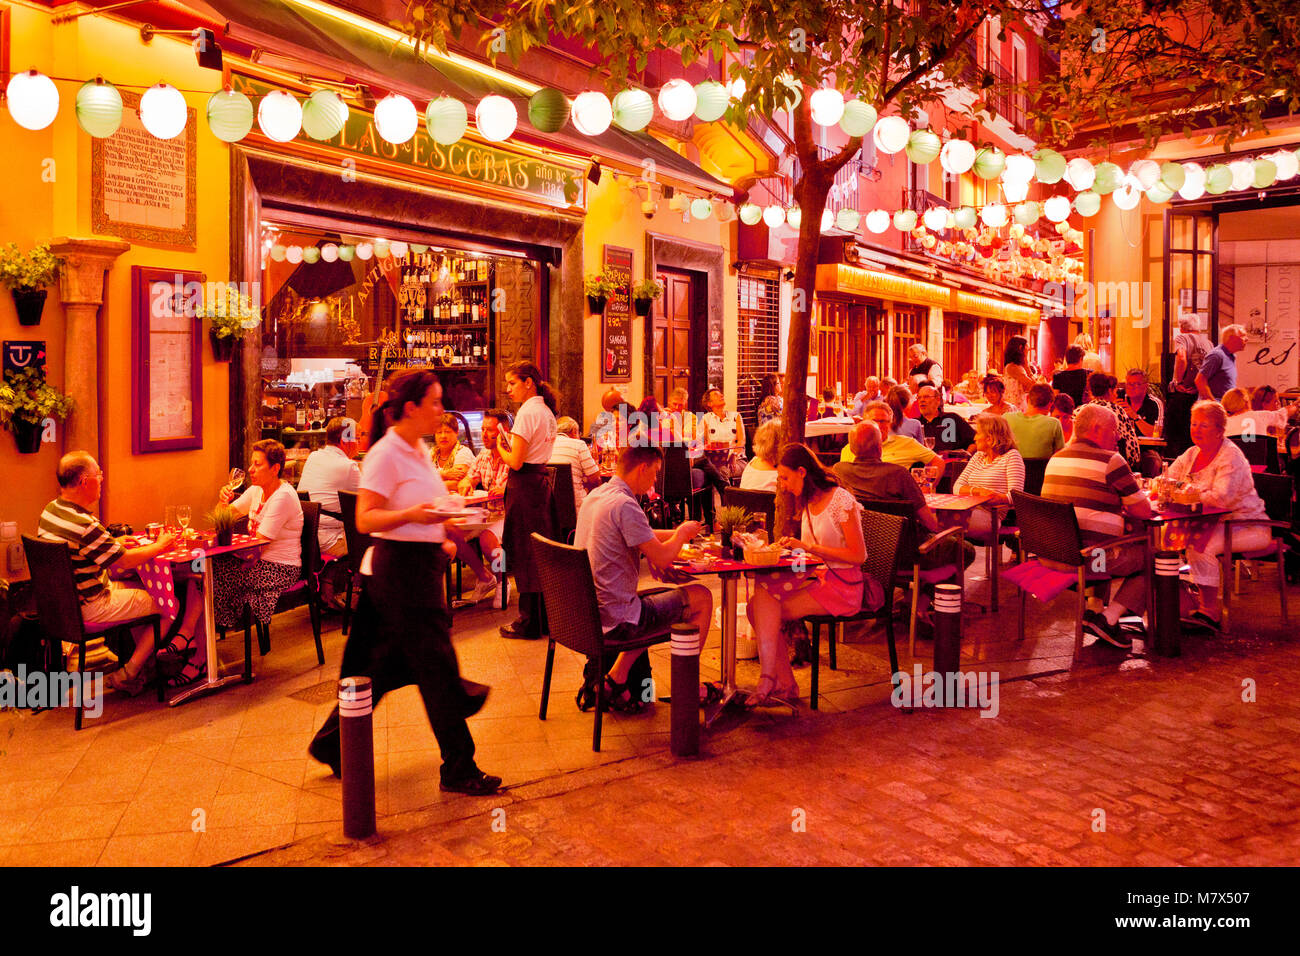 Restaurante sevilla fotografías e imágenes de alta resolución - Alamy